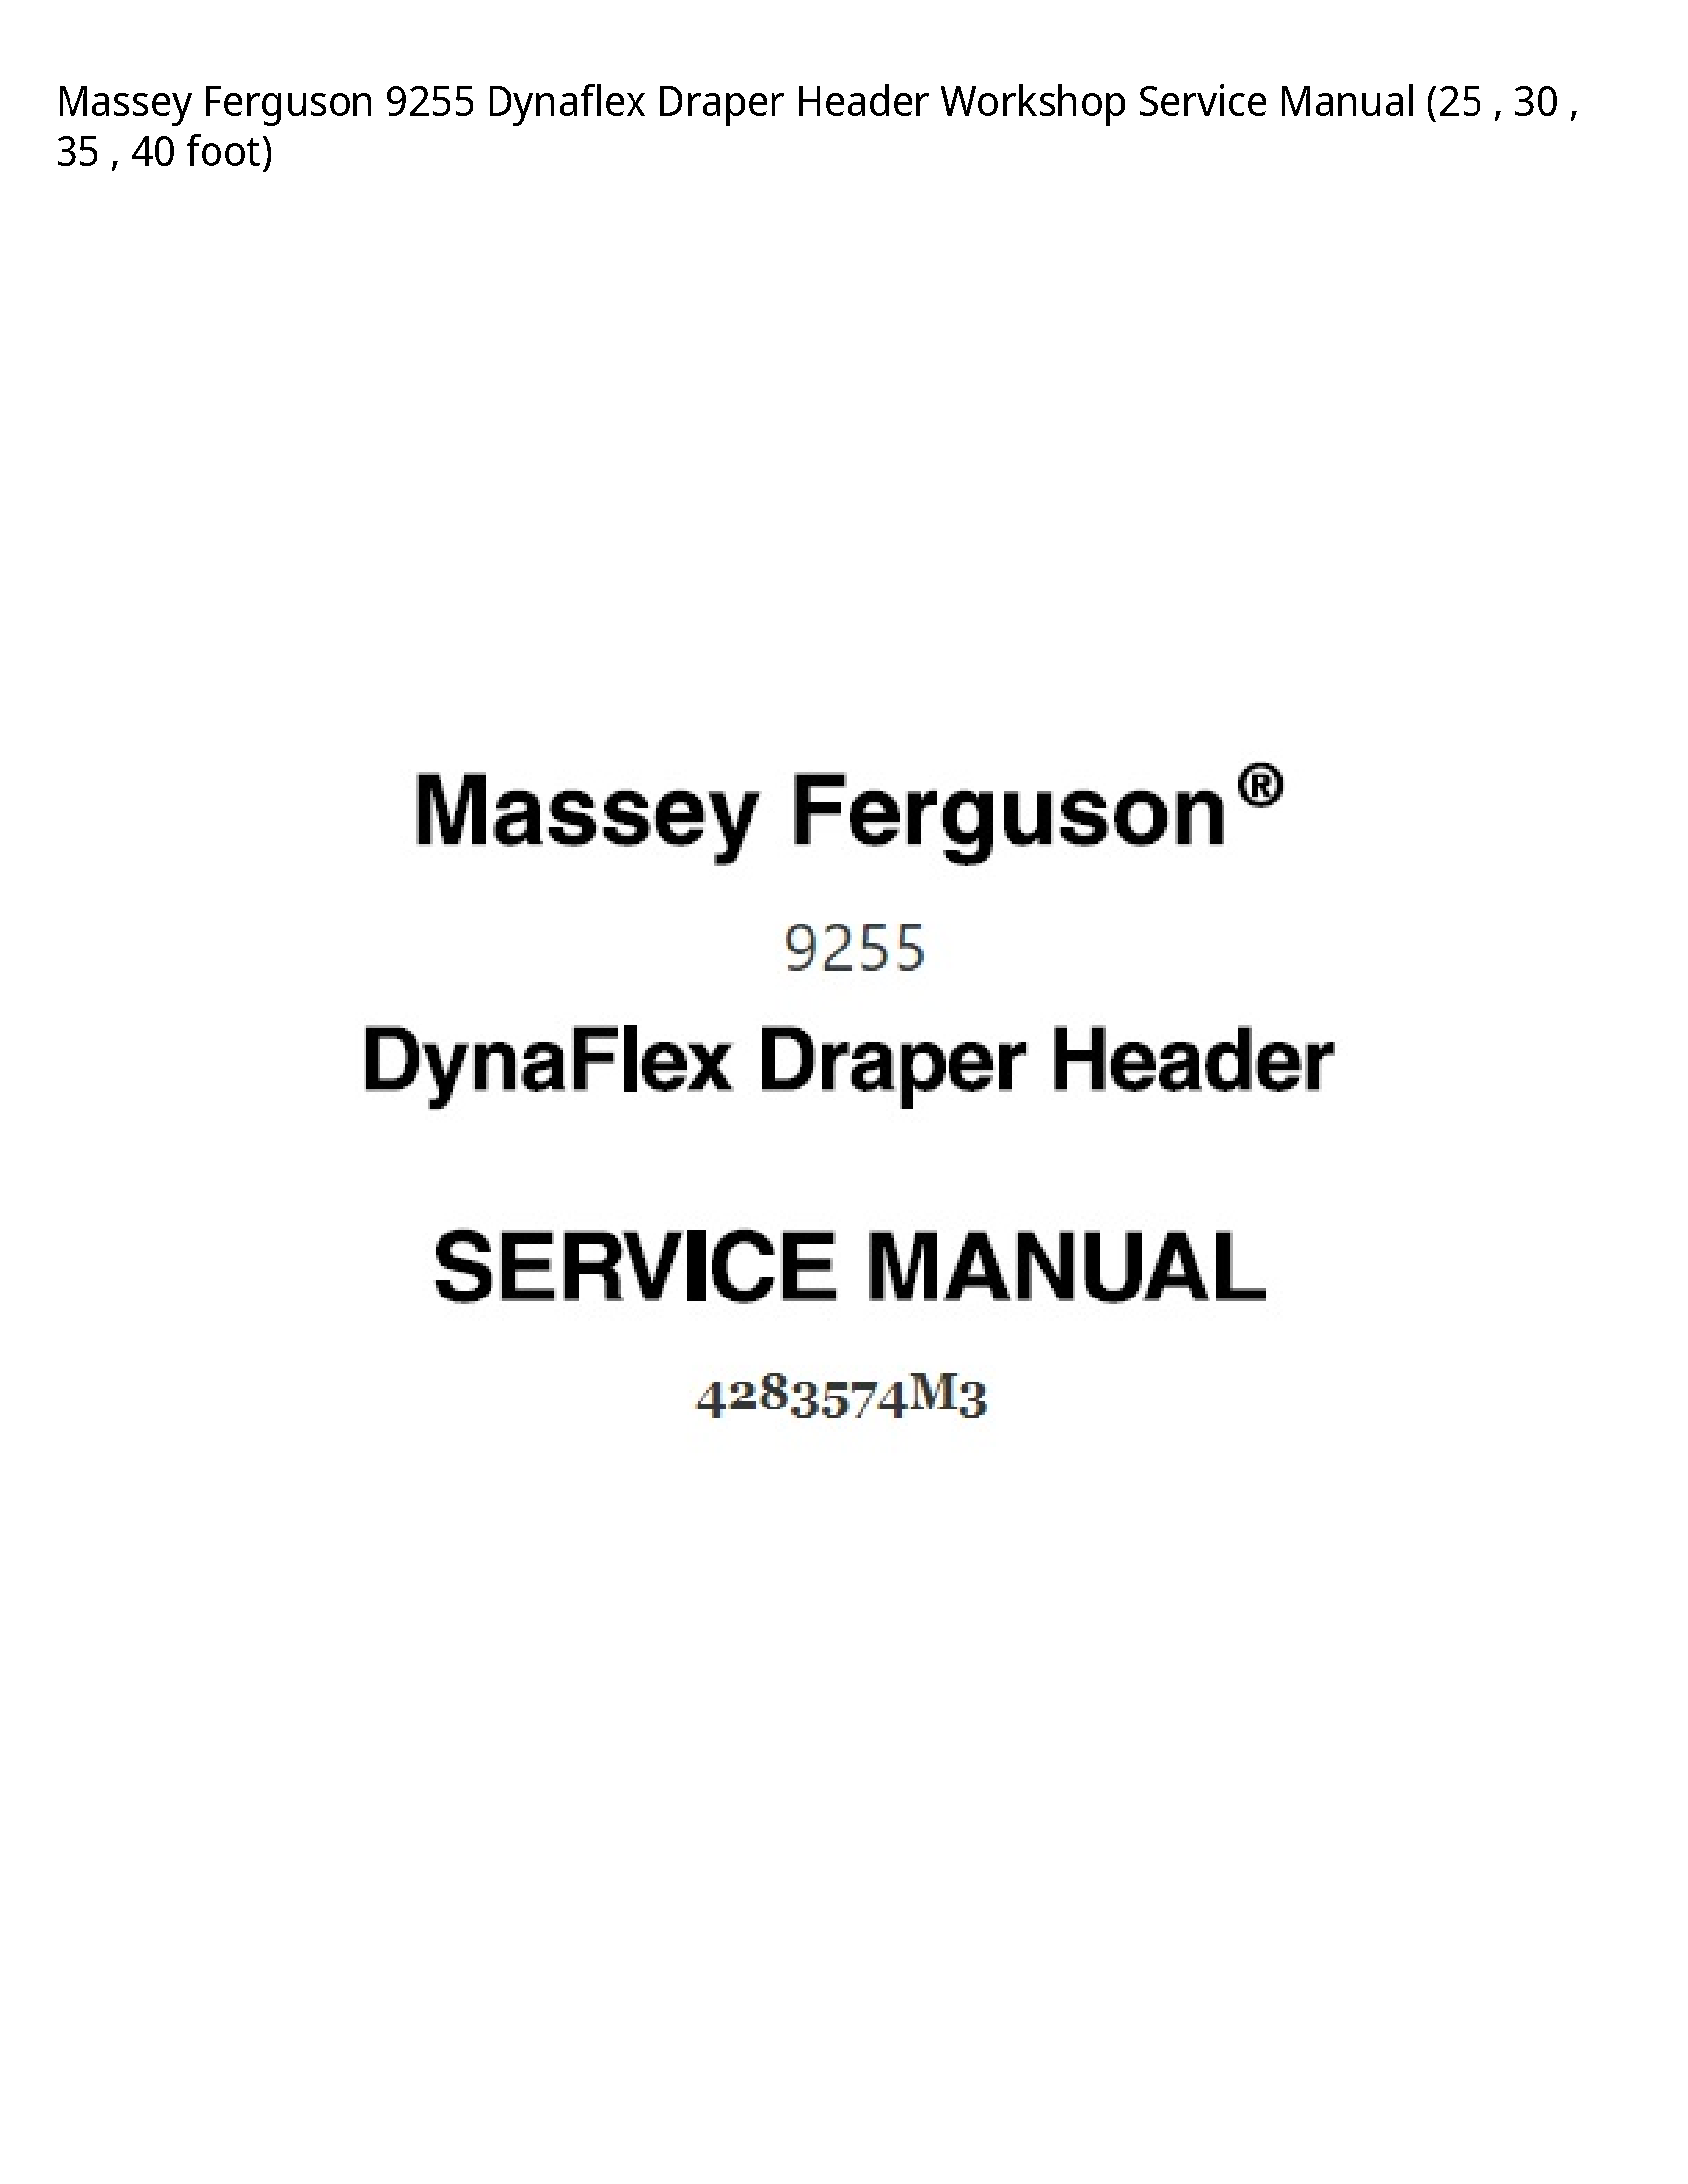 Massey Ferguson 9255 Dynaflex Draper Header Service manual